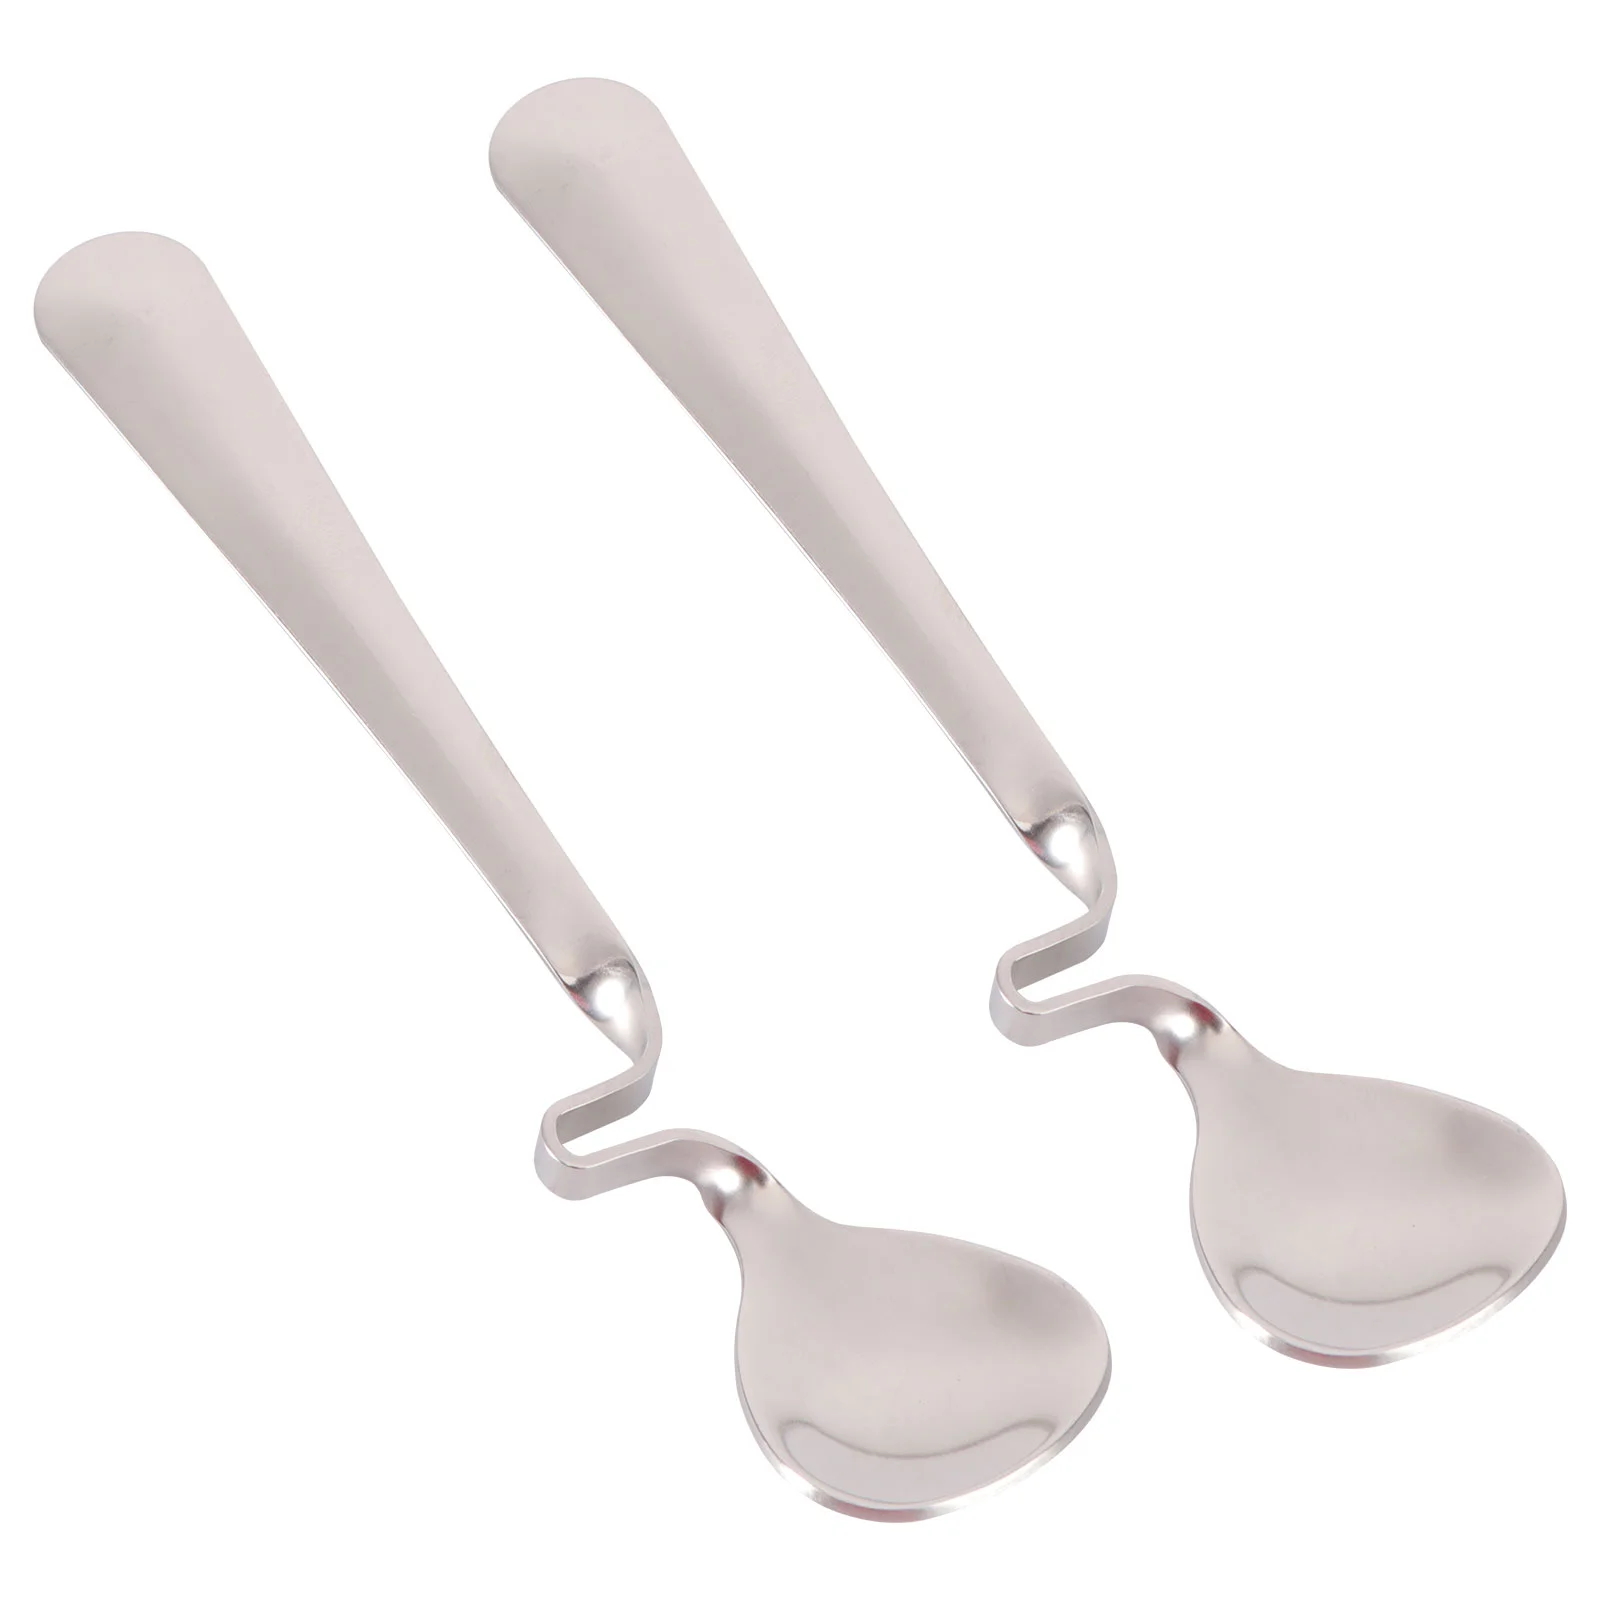 

2 PCS Honey Spoons Espresso Spoon Coffee Mixing Spoons Serving Spoons Soup Spoons Silverware Appetizer Mini Coffee Spoon